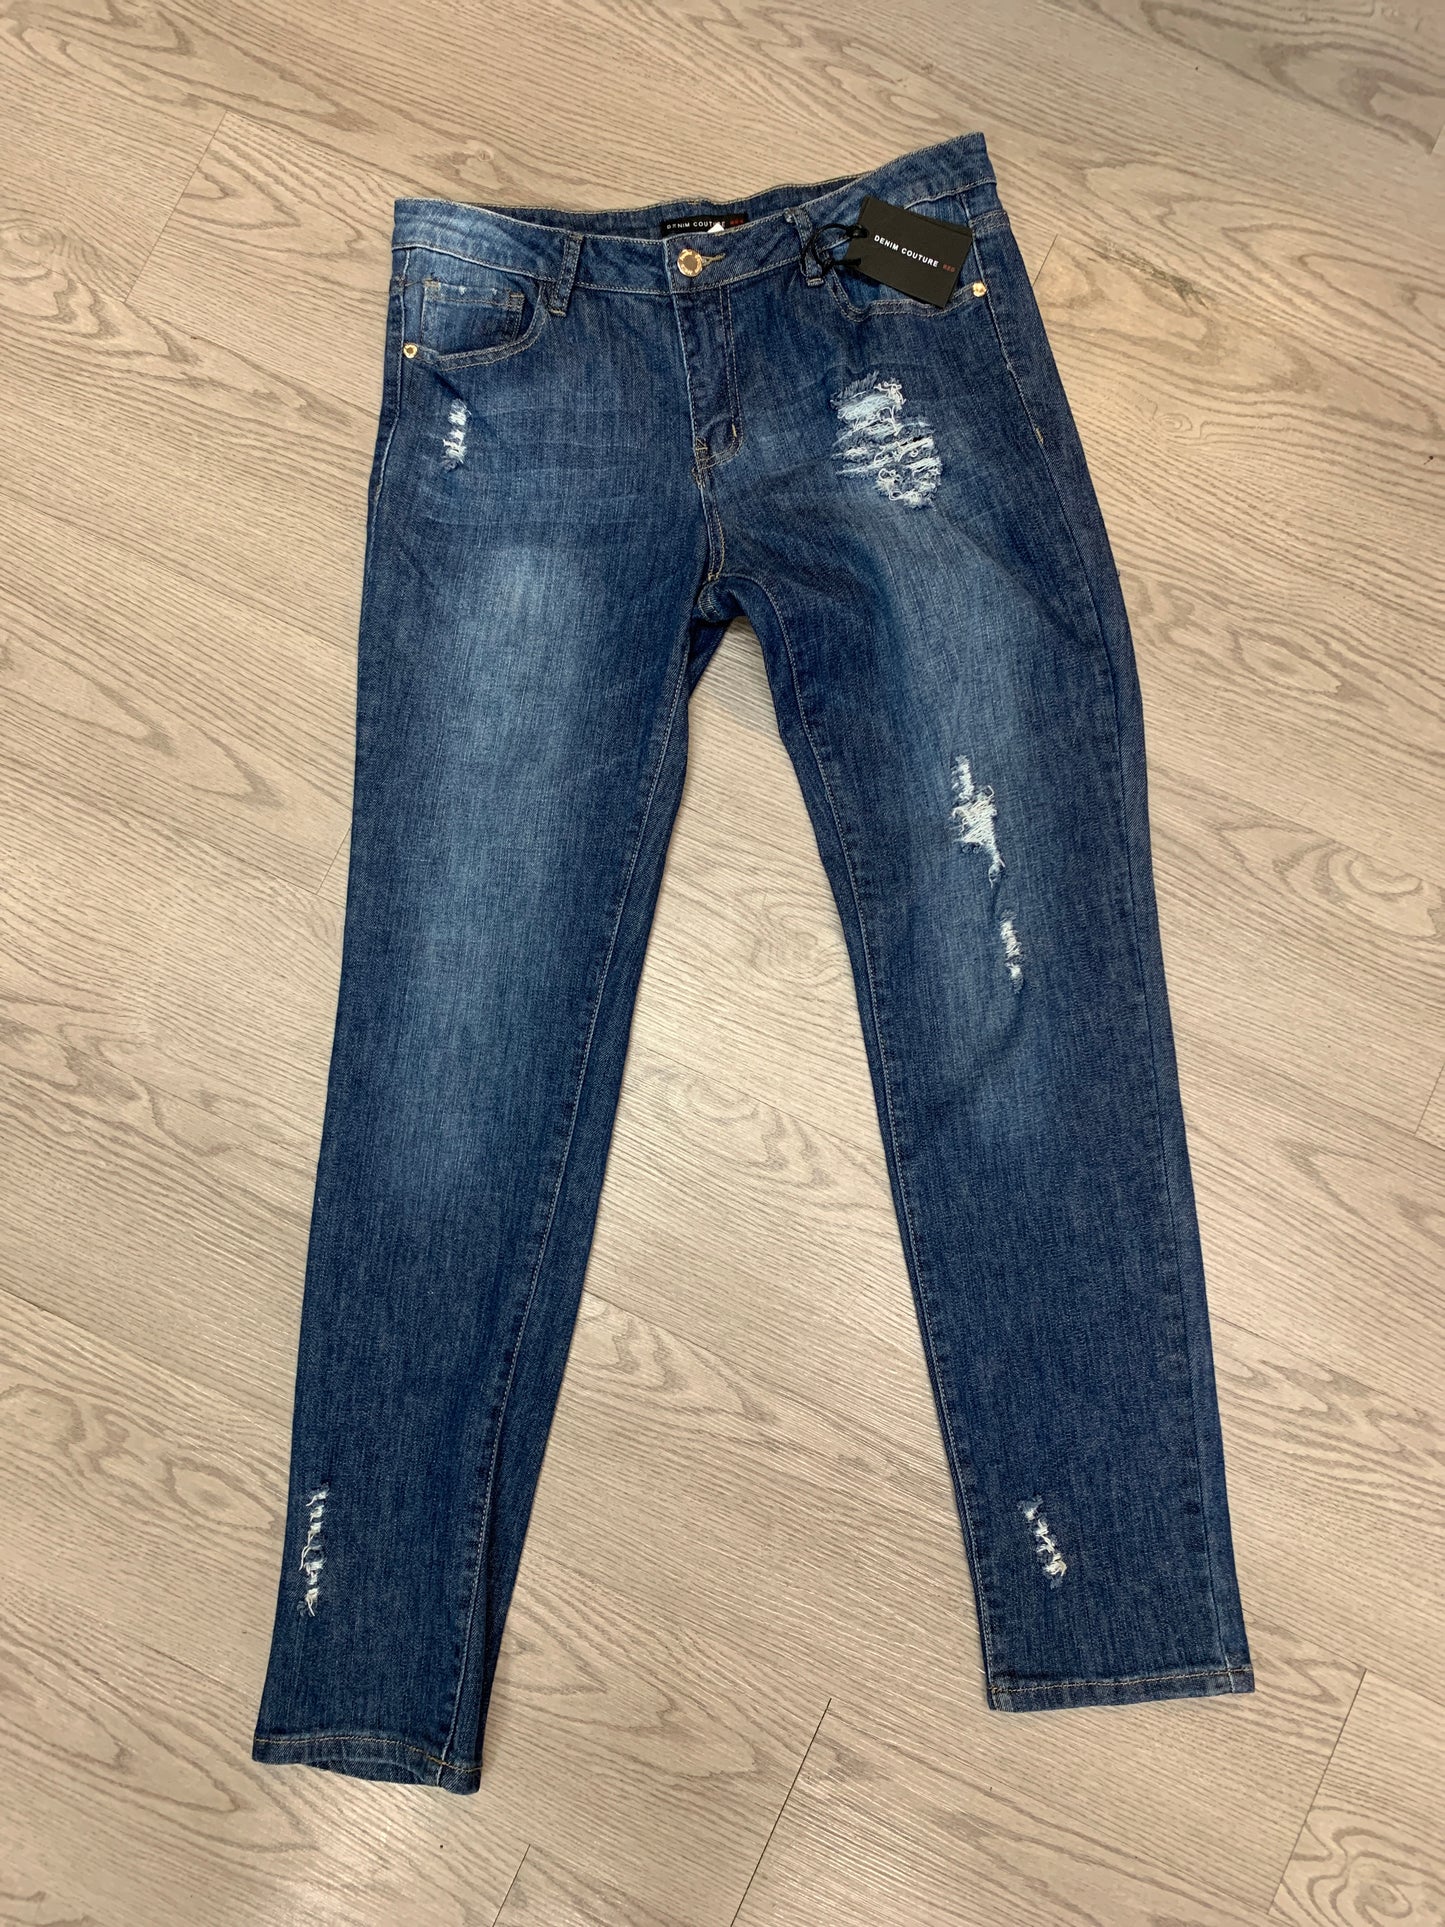 Denim Couture slim fit distressed denim jeans